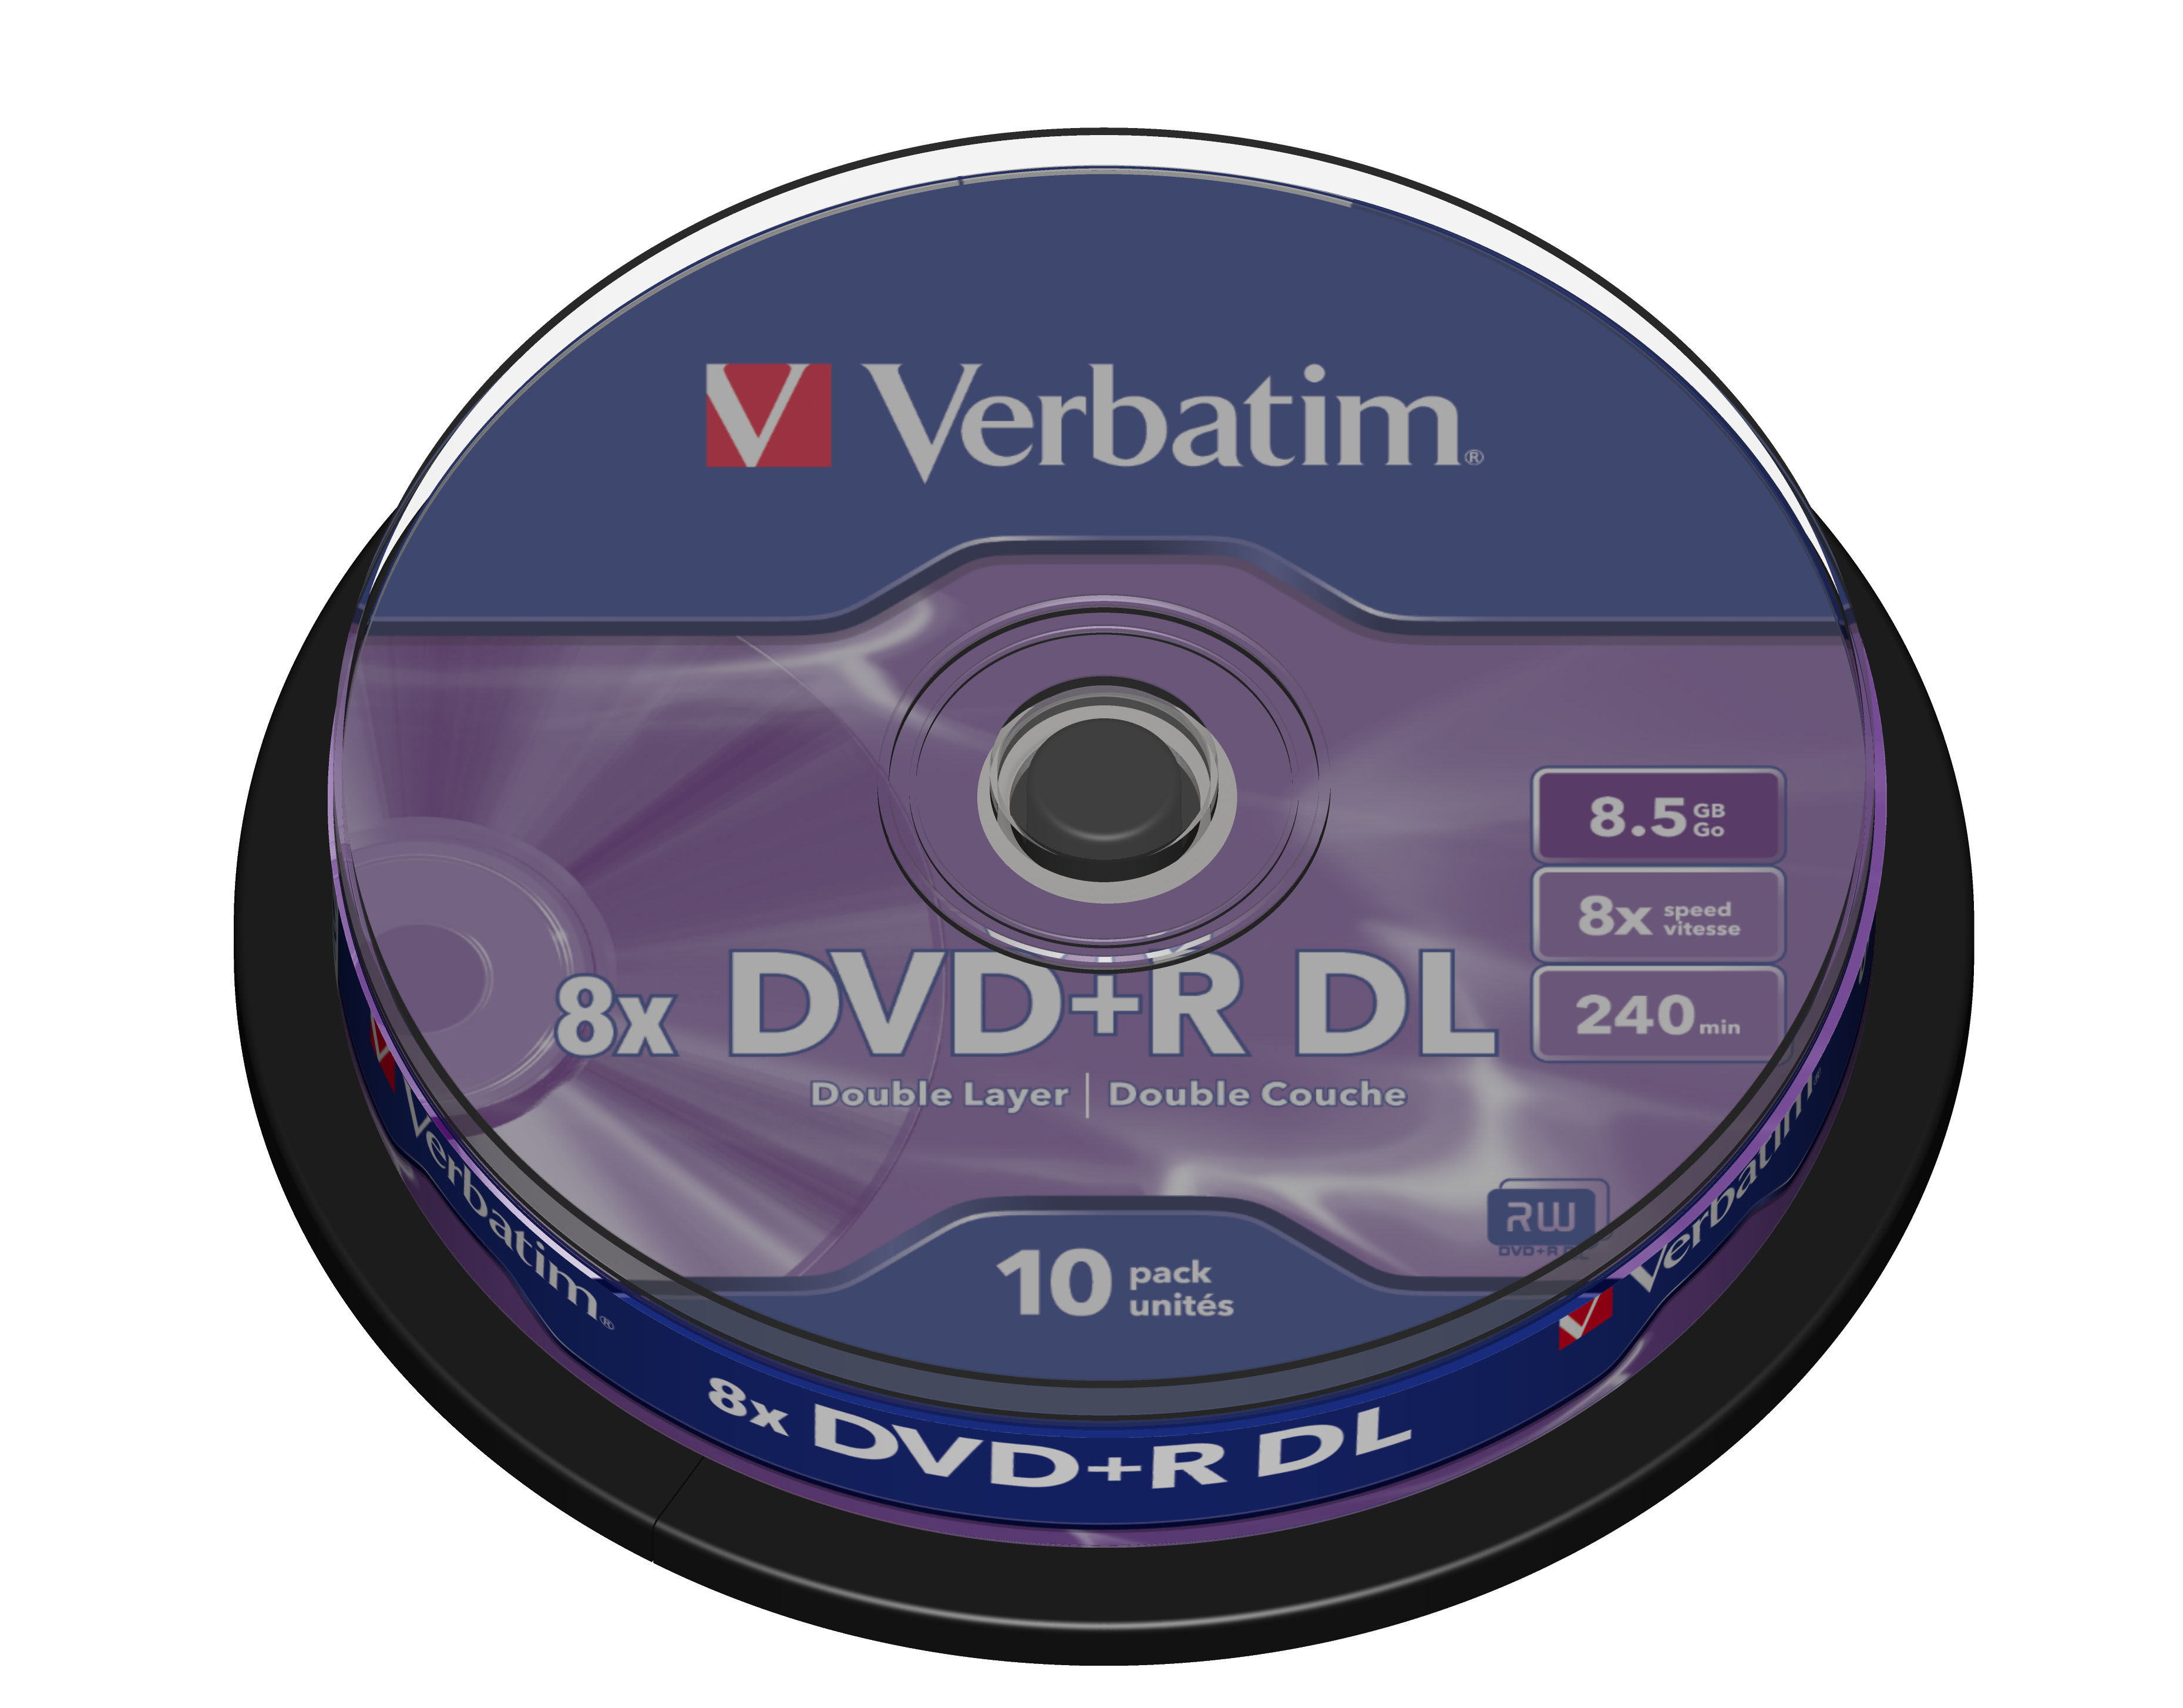 Verbatim dvd+r/8.5gb 8x doublelayer 10pk mattsilv dvd+r/8.5gb double layer 8x matt silver surface 10sp